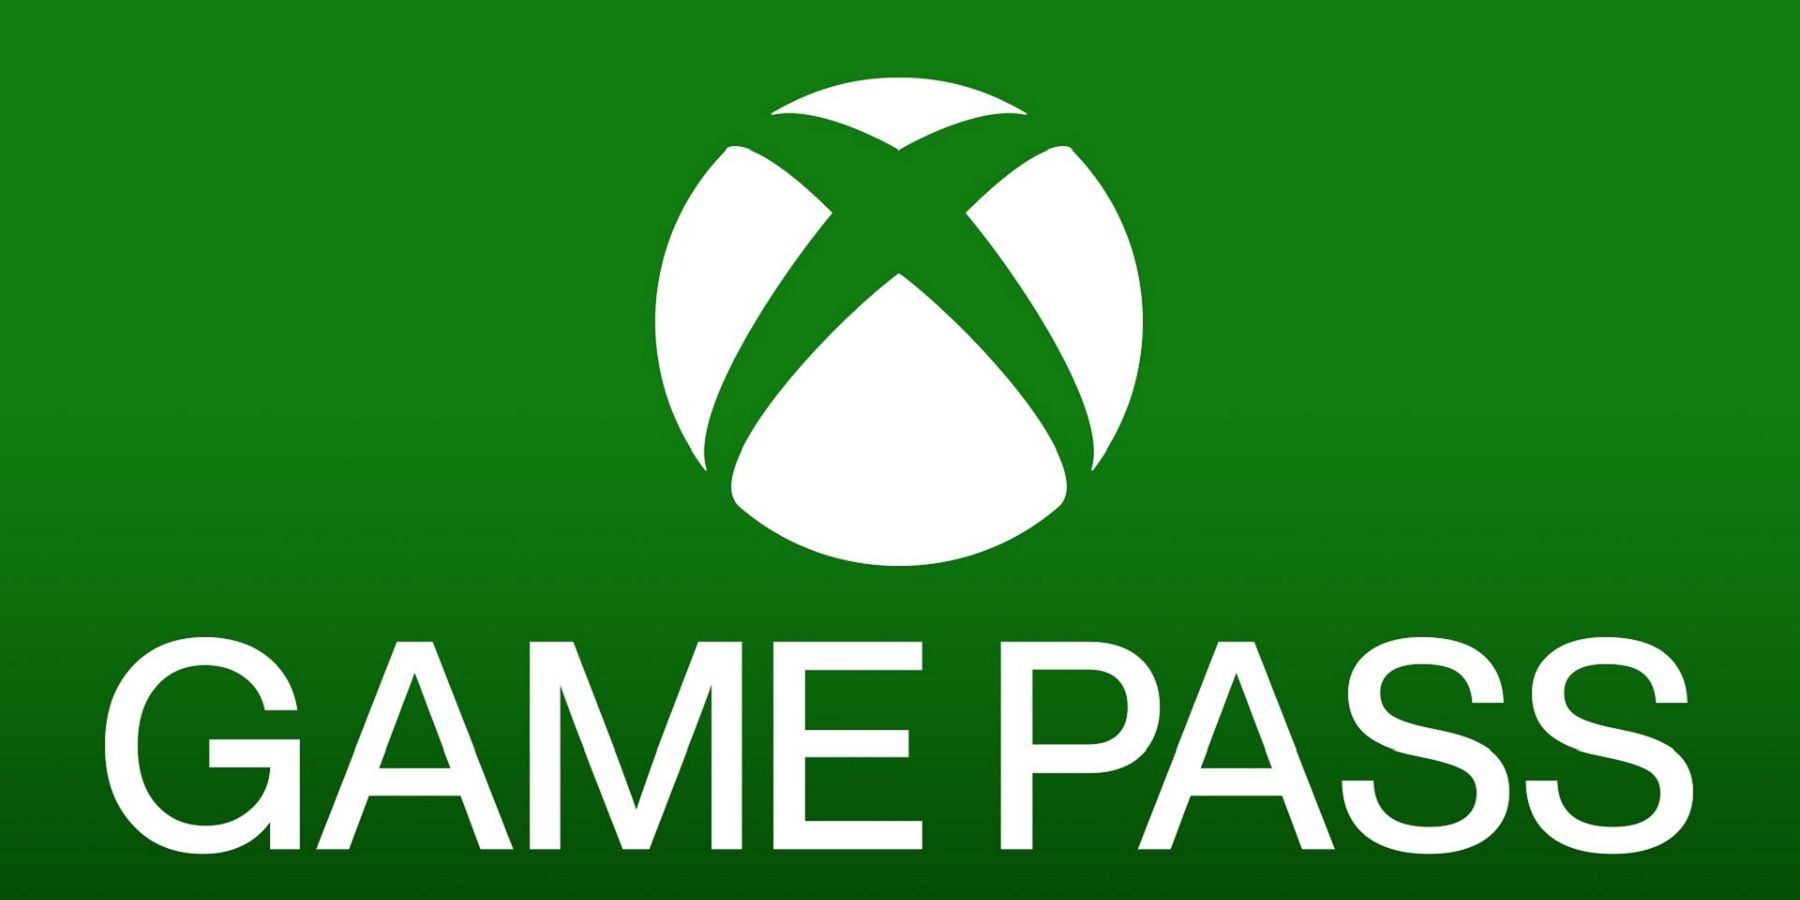 xbox game pass green logo with white text